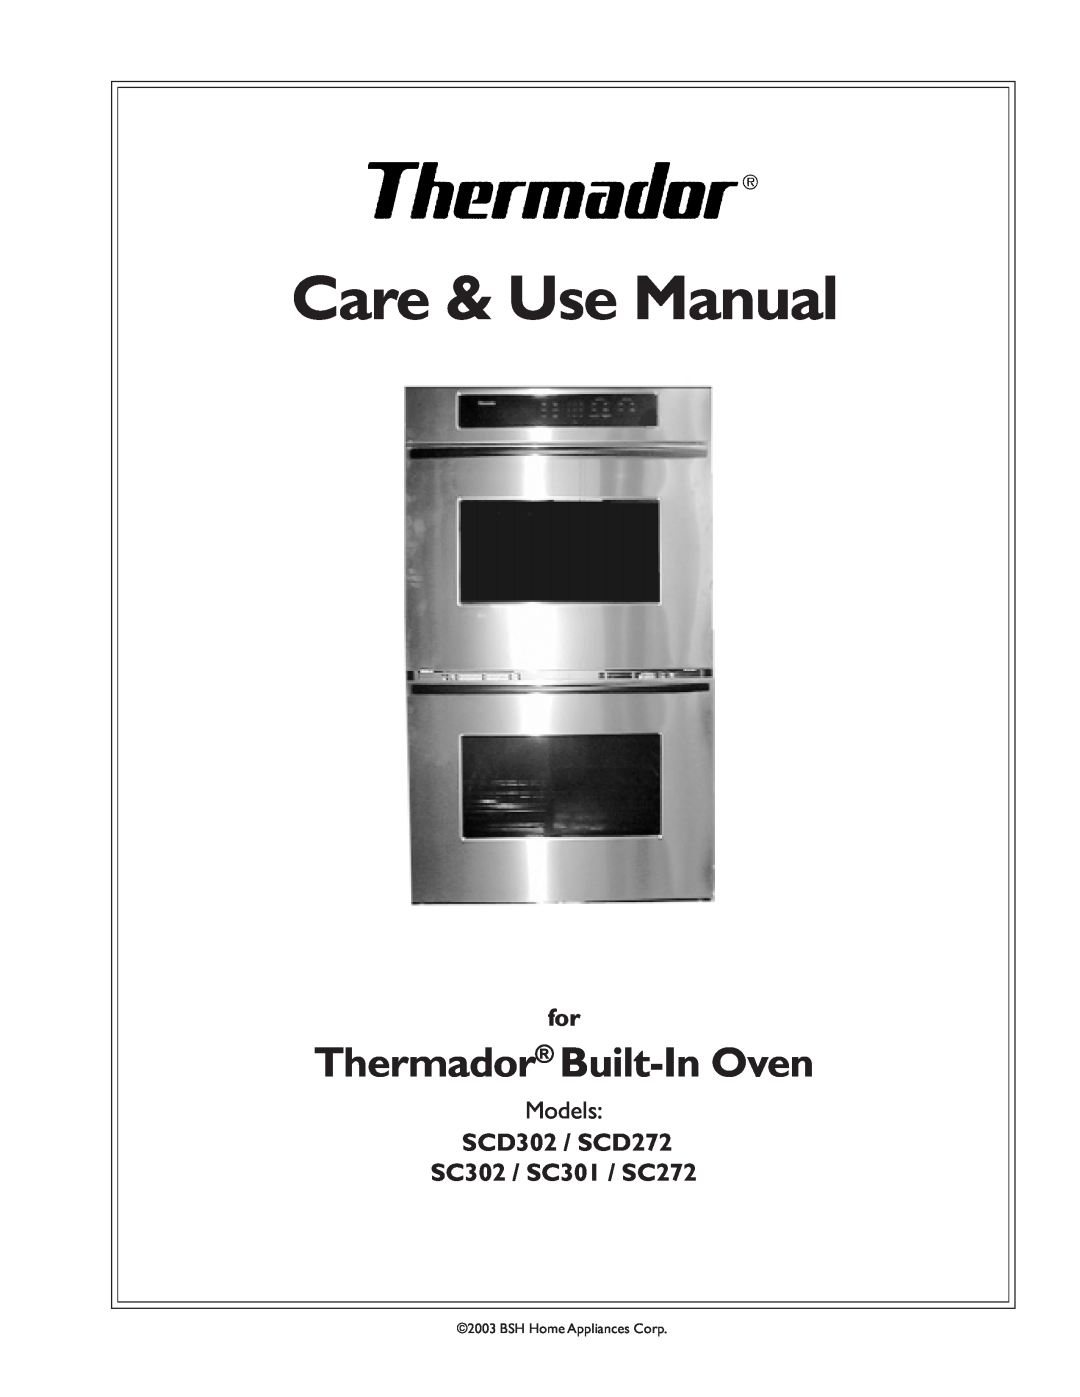 Thermador manual Thermador Built-InOven, Models, SCD302 / SCD272 SC302 / SC301 / SC272, Care & Use Manual 